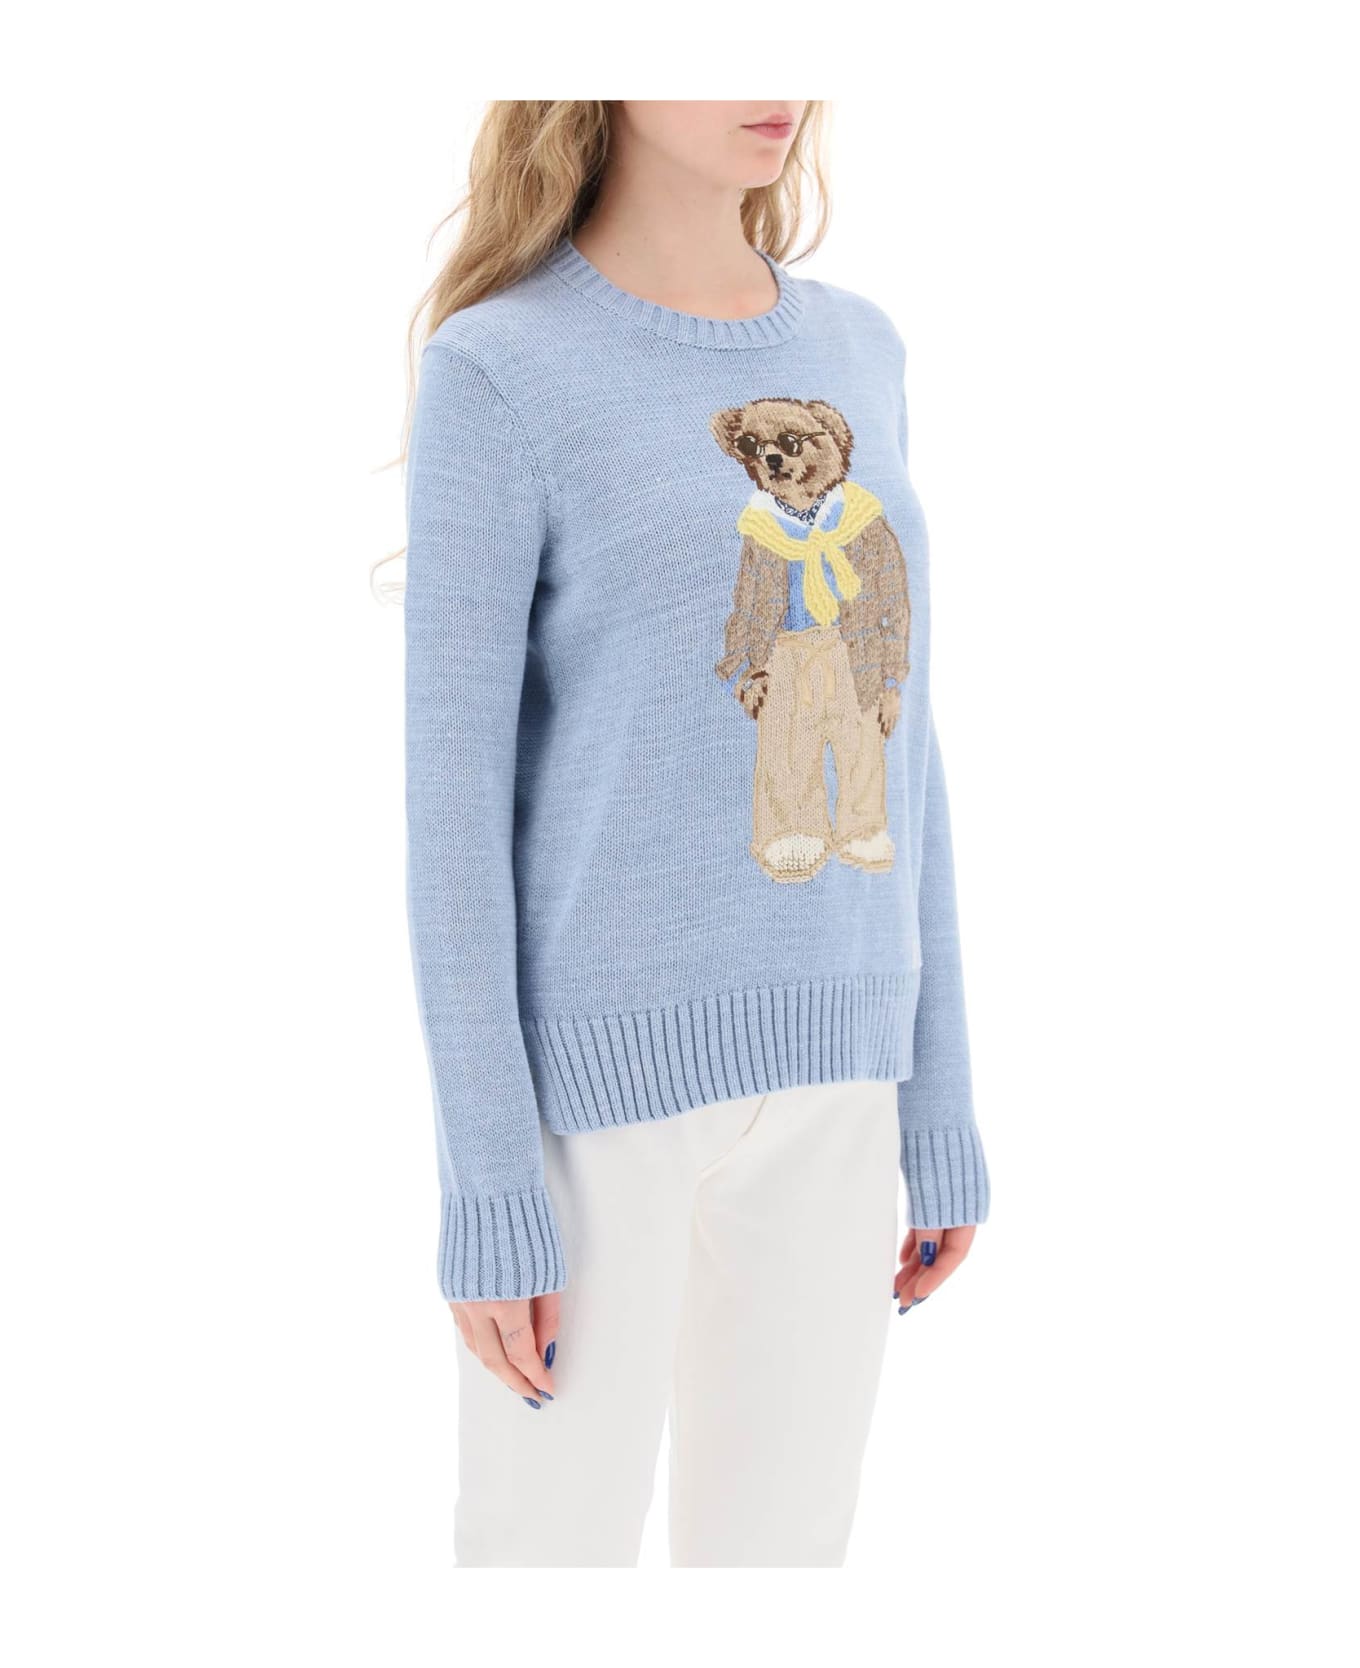 Polo Ralph Lauren 'classics' Cotton Sweater - Light Blue